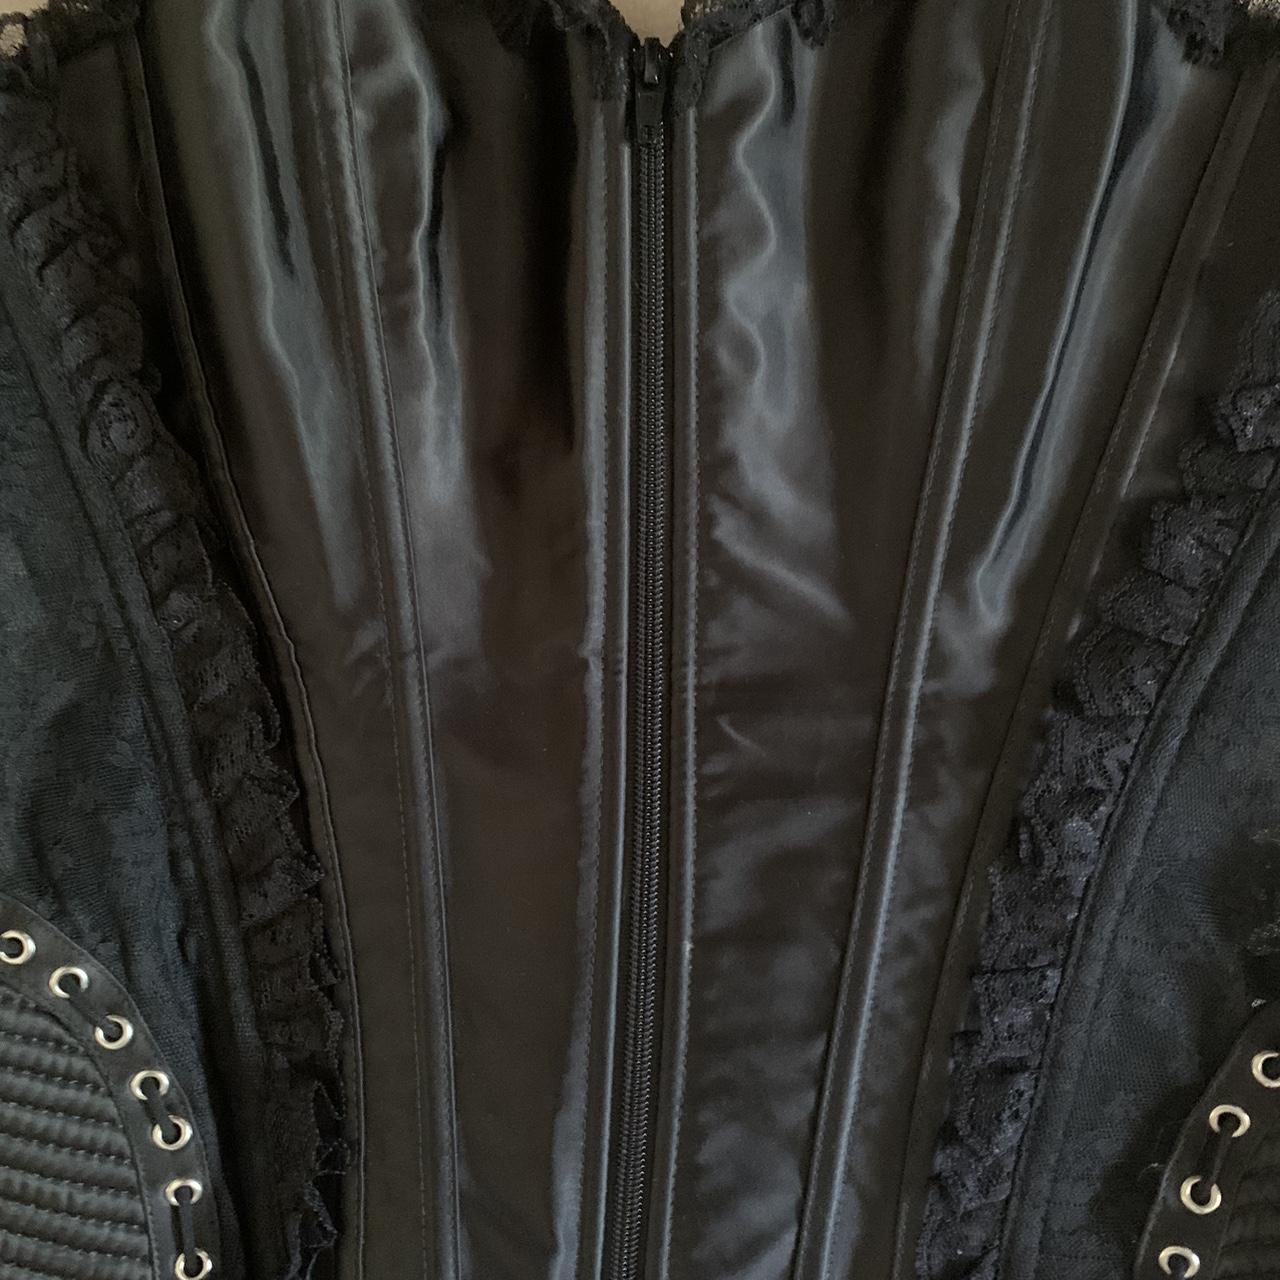 Satin and lace corset, black, excellent condition.... - Depop